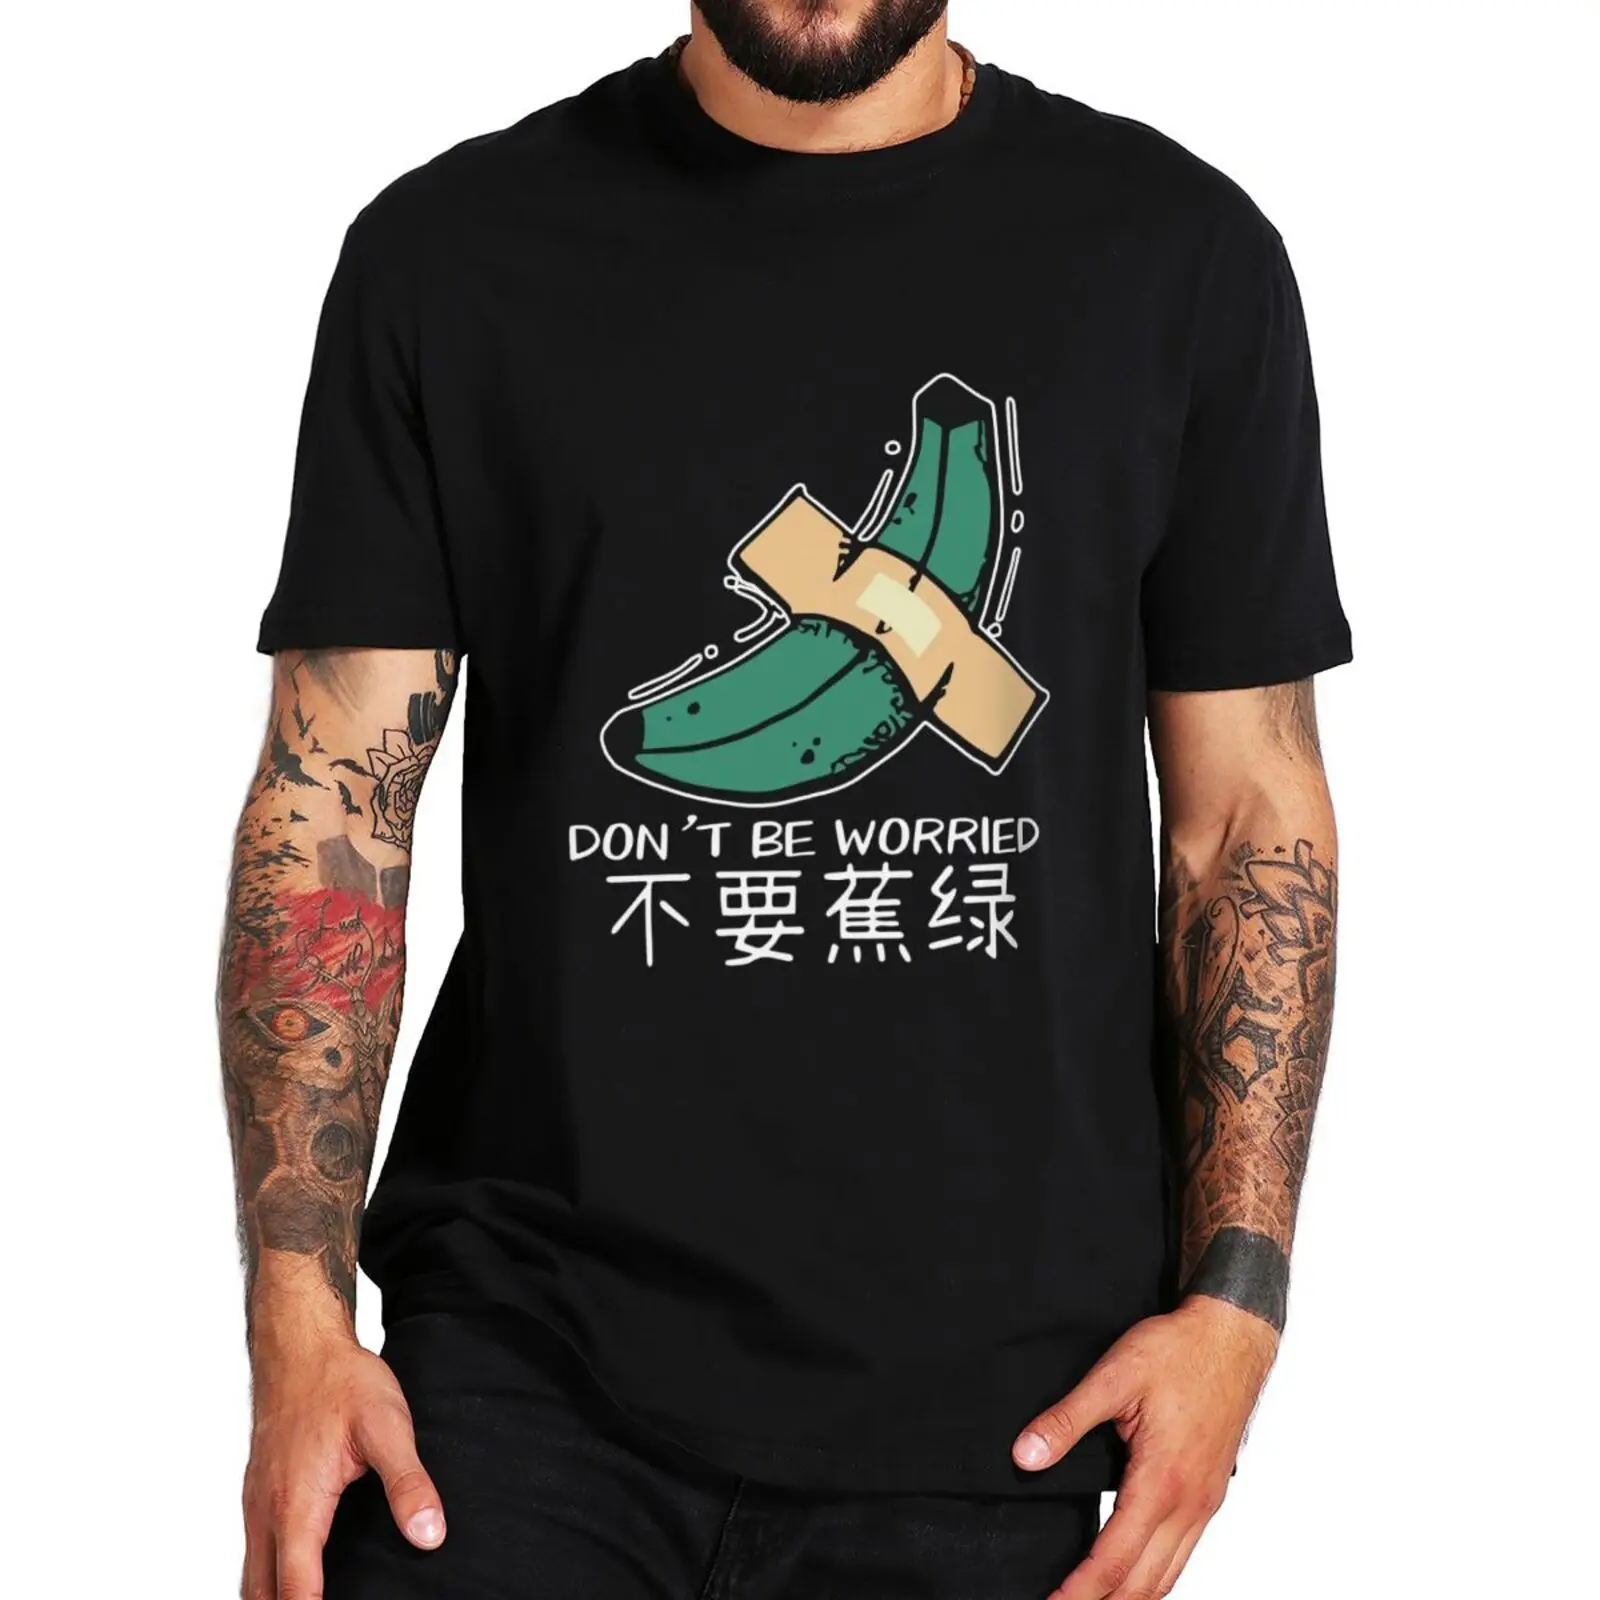 

Banana Don't Be Worried T Shirt Funny Sayings Humor Jokes Harajuku Tee Tops 100% Cotton Unisex Soft Casual T-shirt EU Size